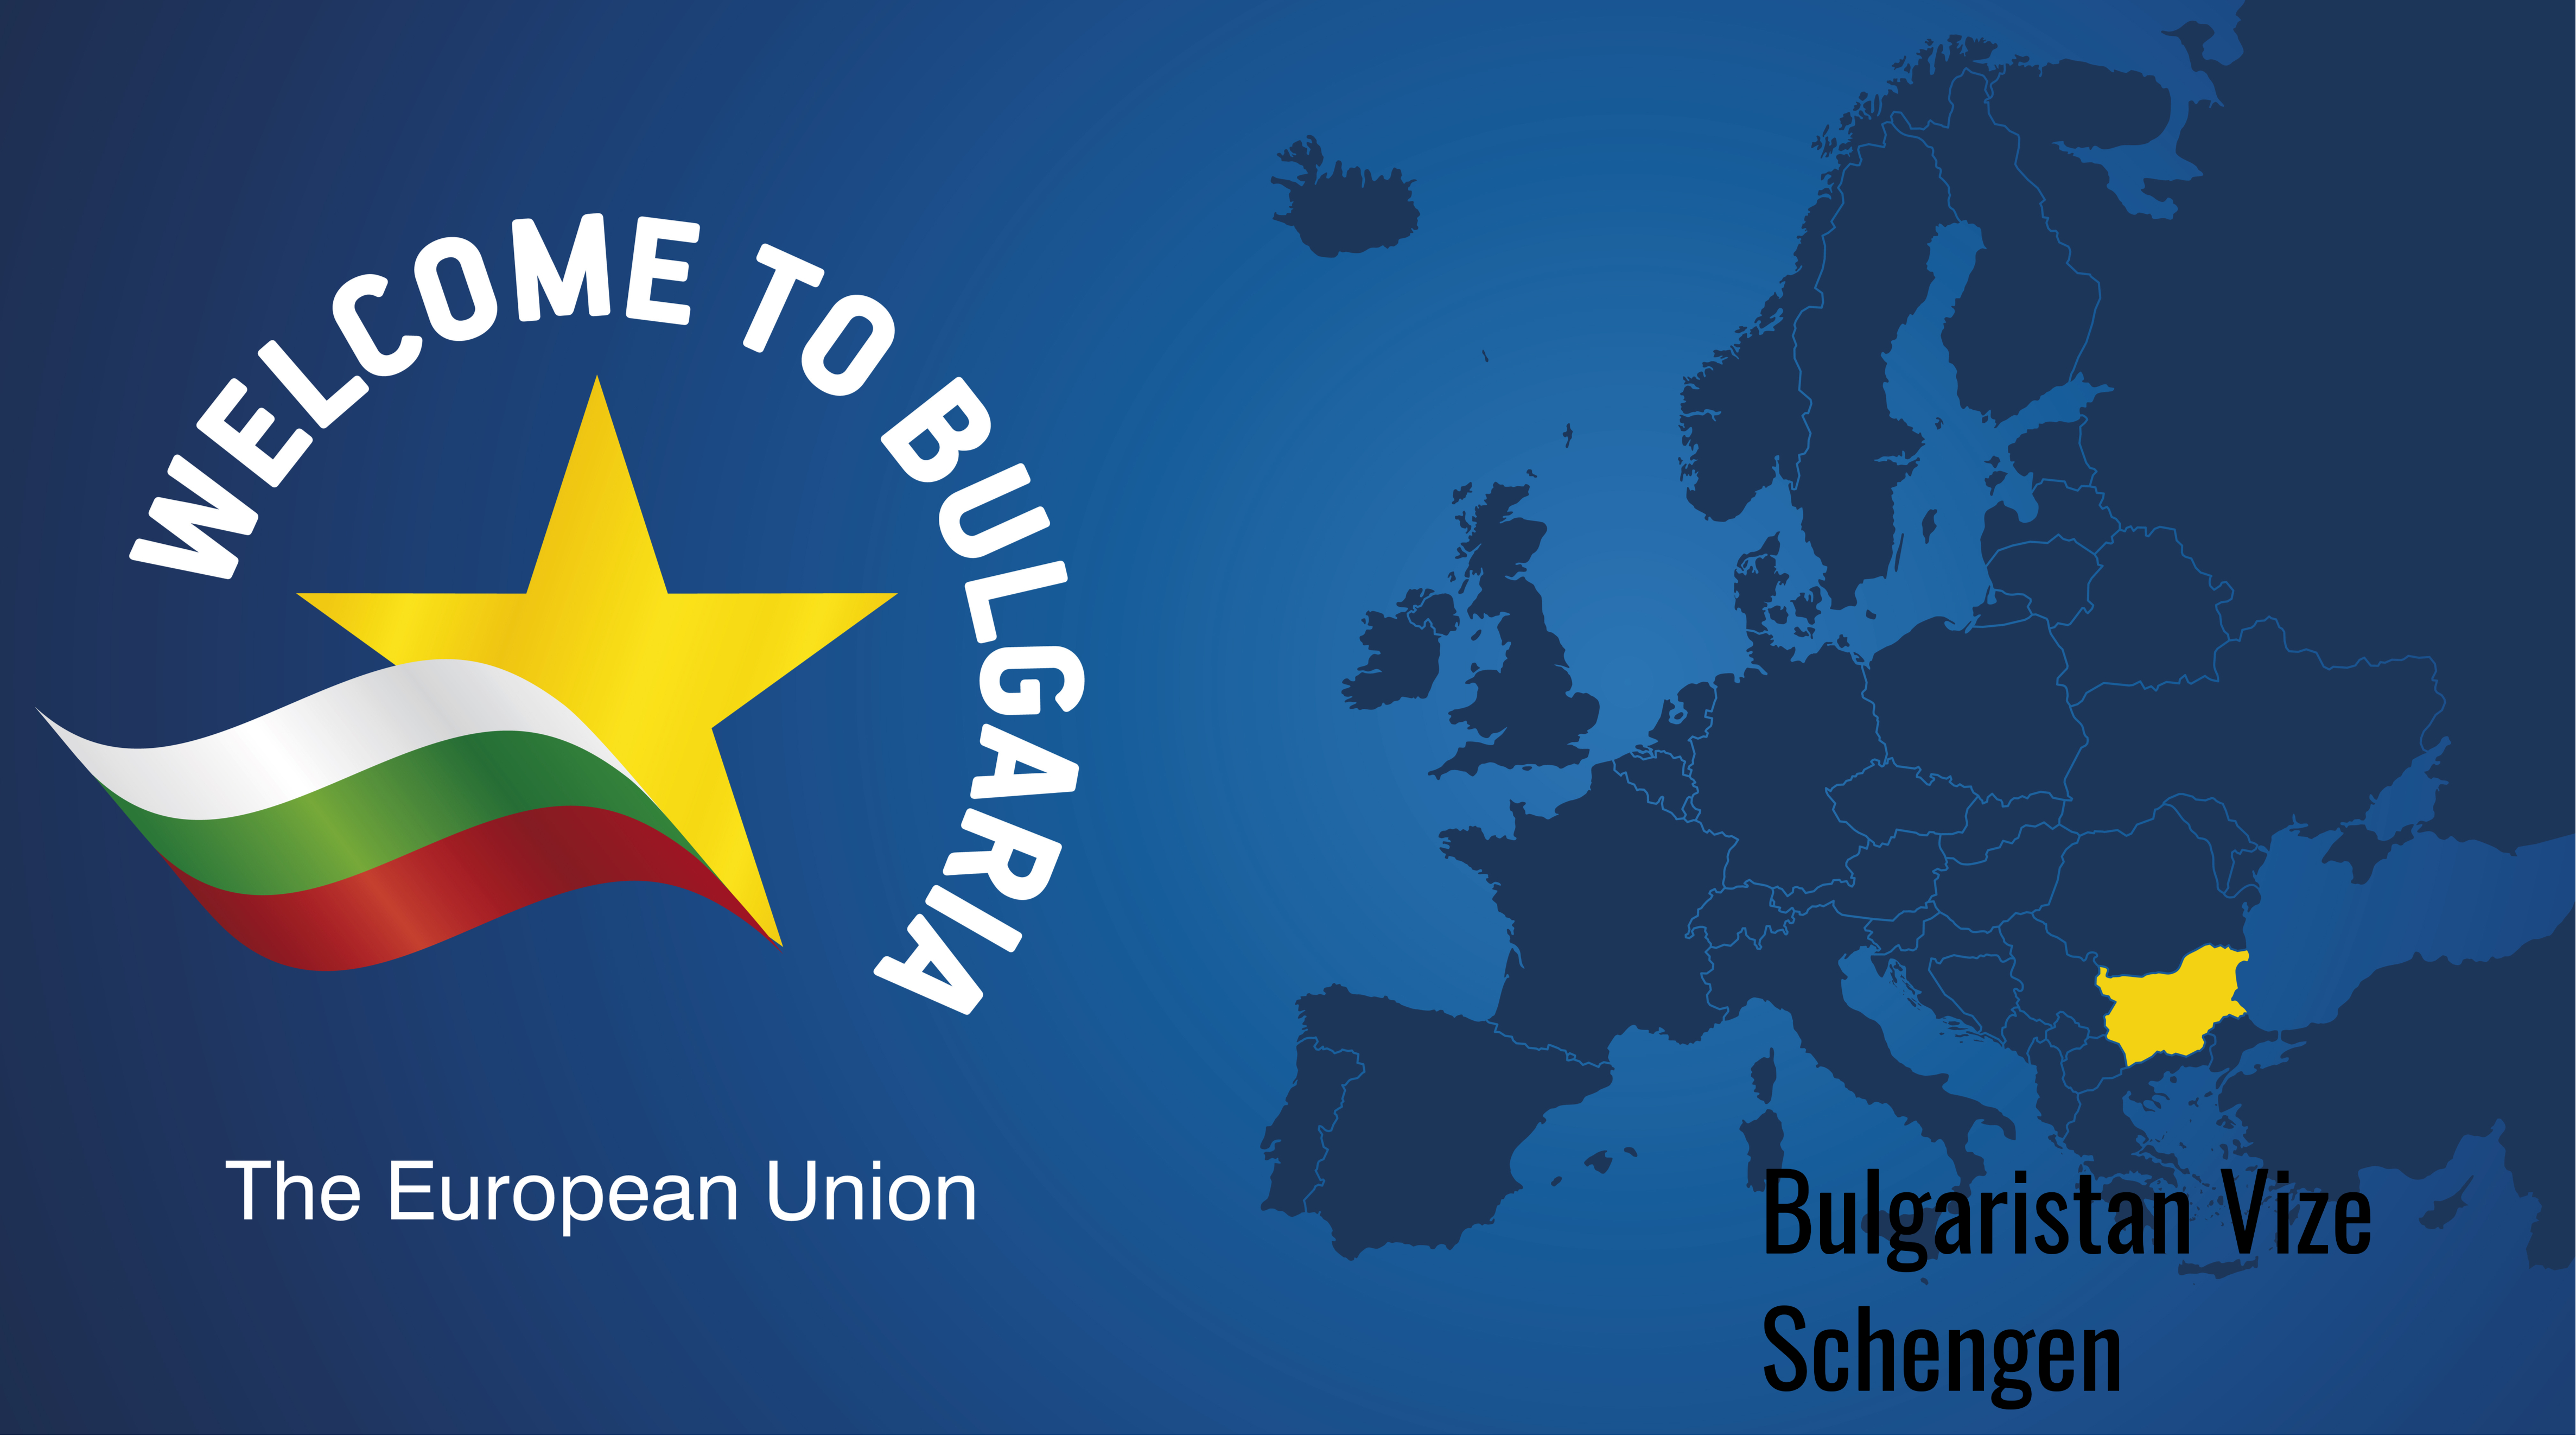 bulgaristan vize schengen